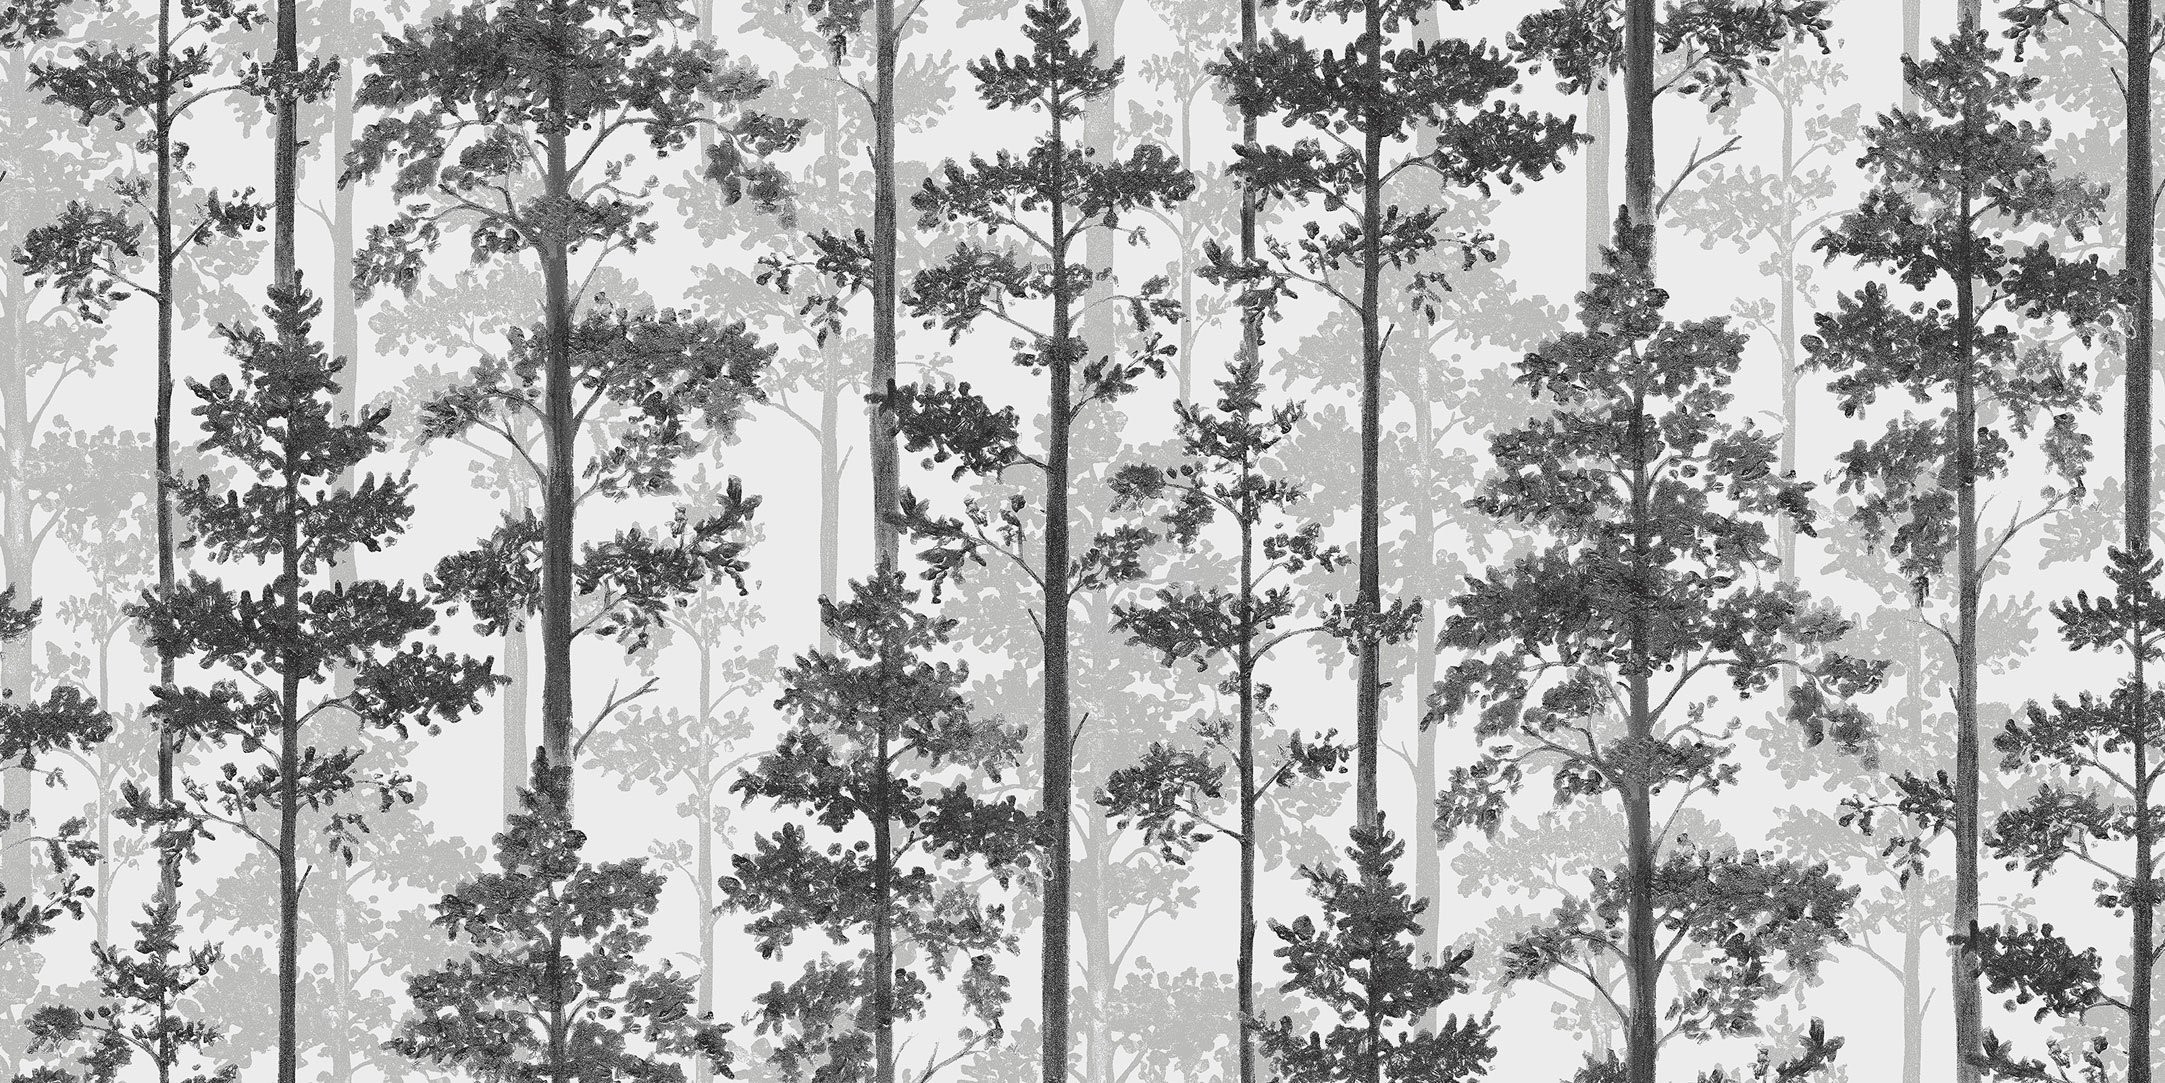 Обои на стену лес. Шведские обои Eco, коллекция graphic World (Engblad & co), артикул 8819. Обои дерево. Дизайнерские обои лес. Дизайнерские обои деревья.